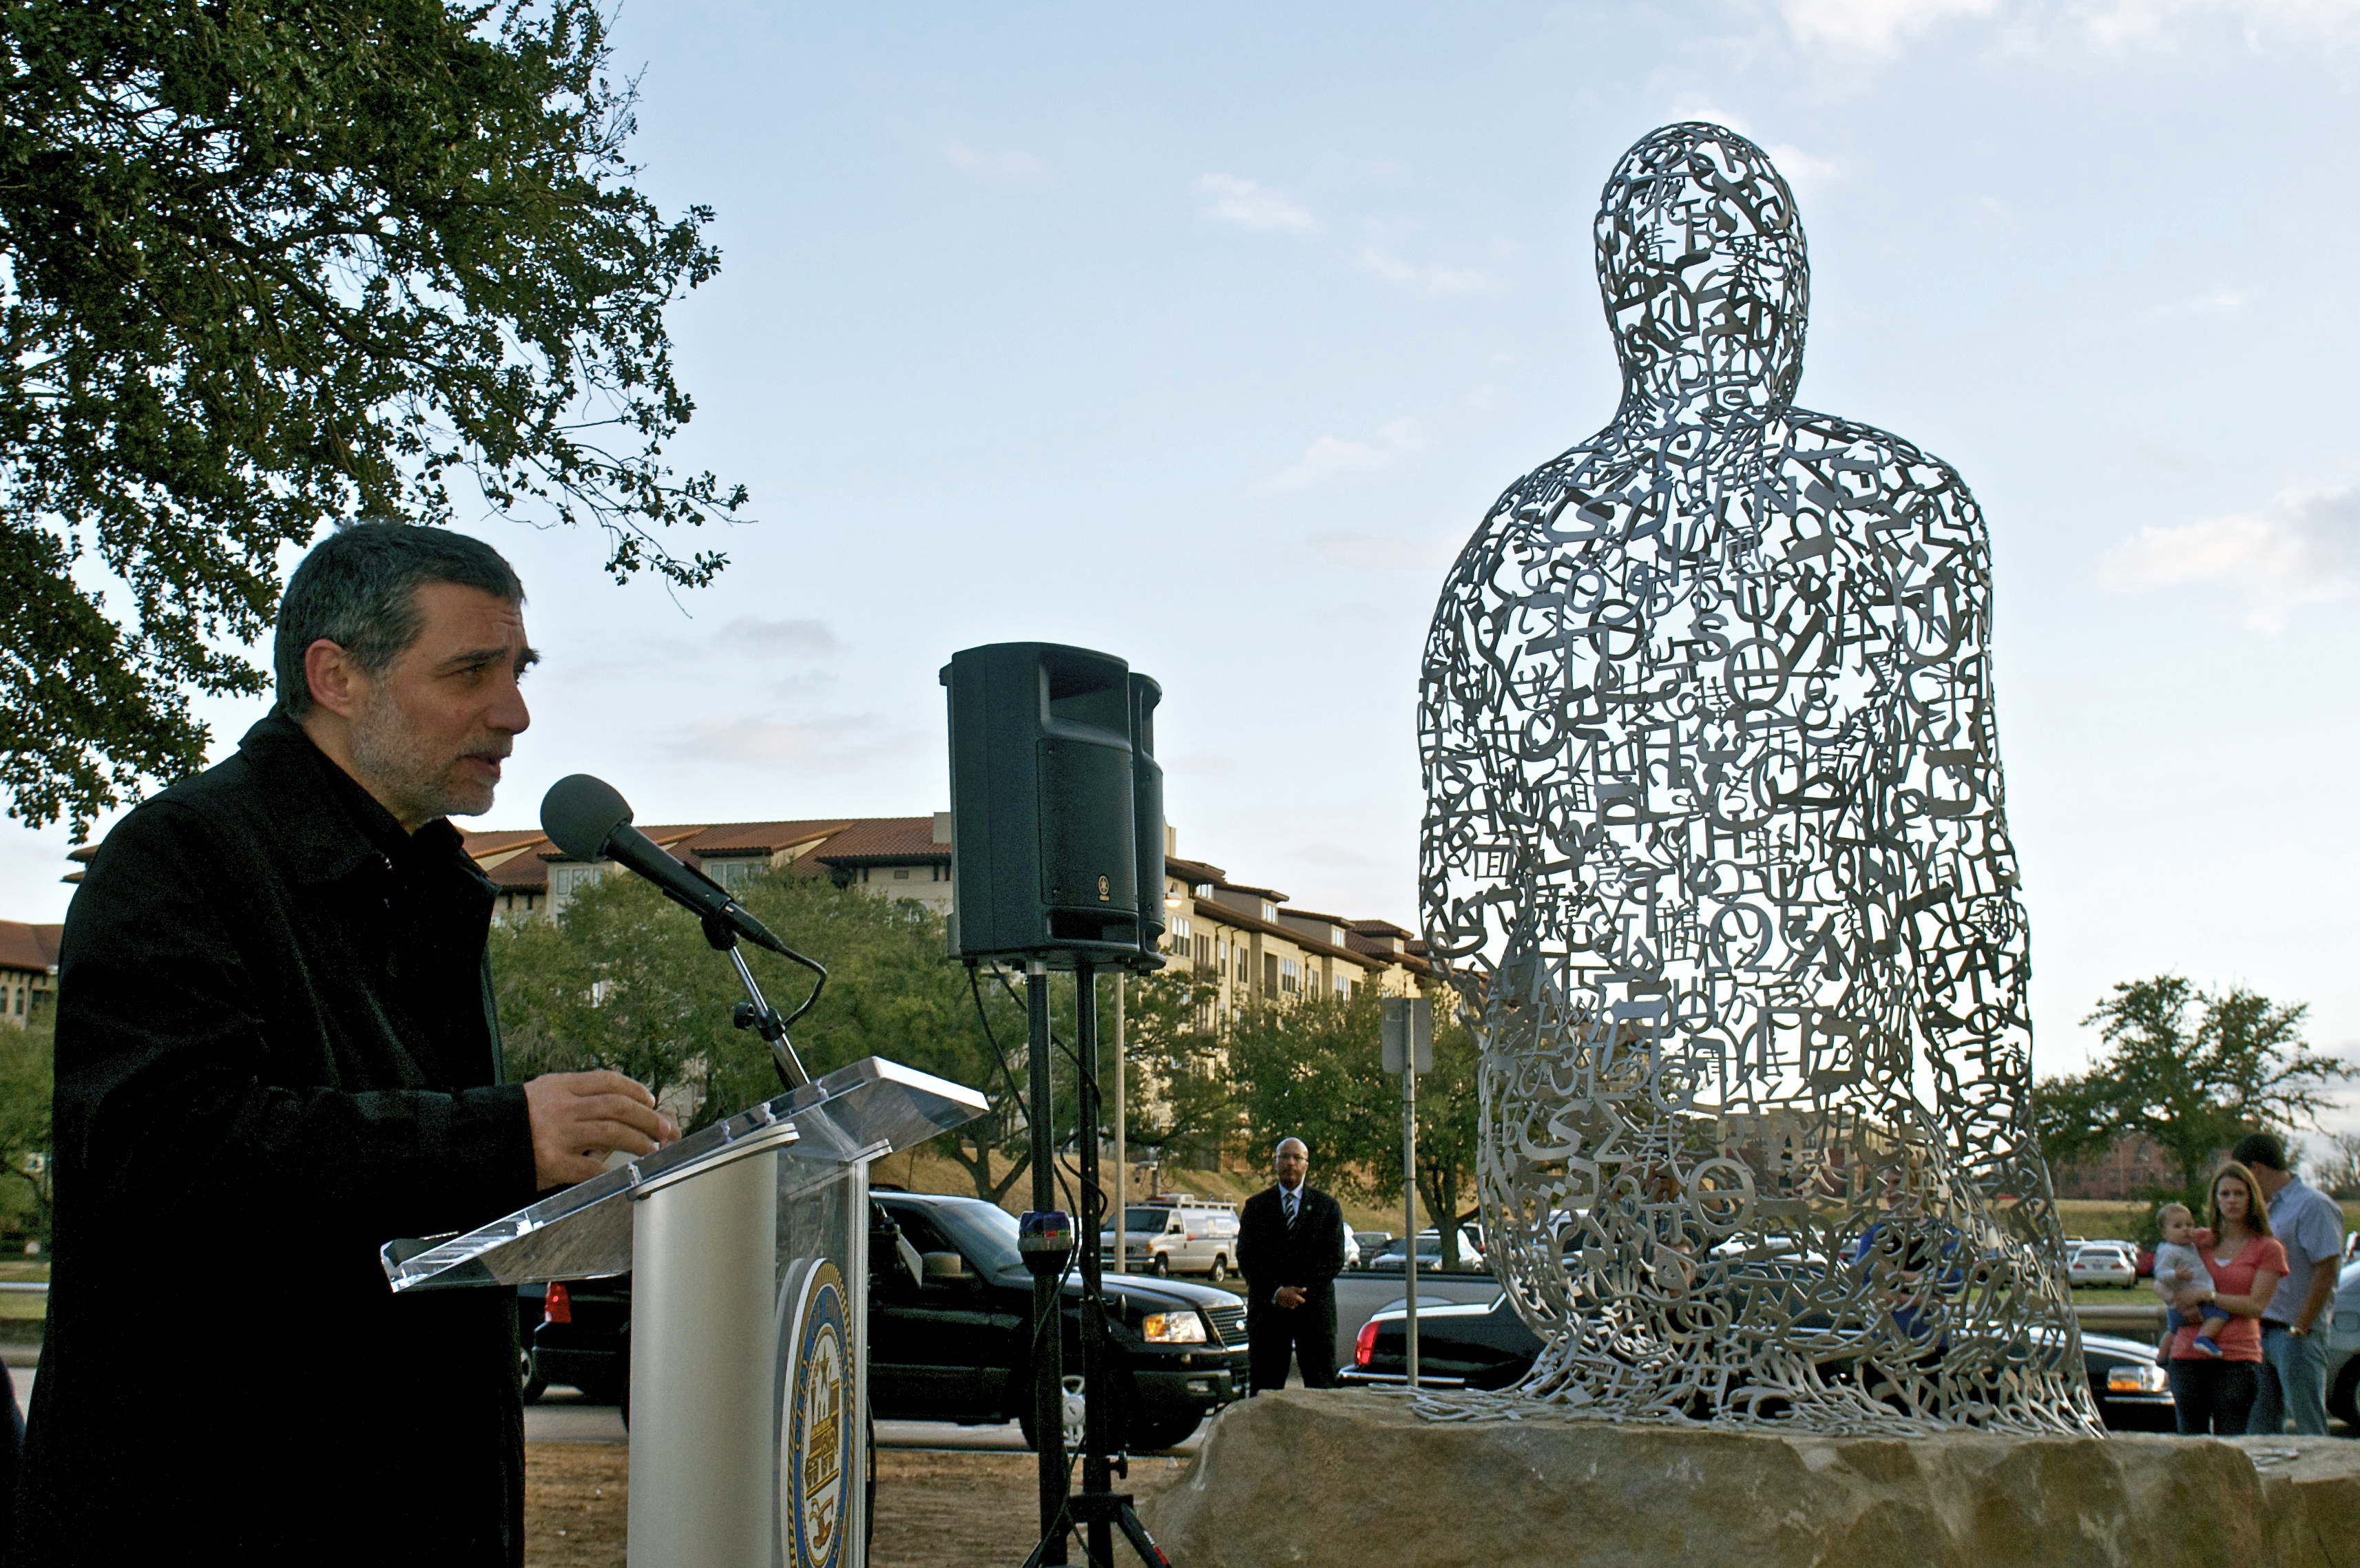 Artist Jaume Plensa speaking about his art work at the Tolerance dedication ceremony. Photo: Zahid Alibhai